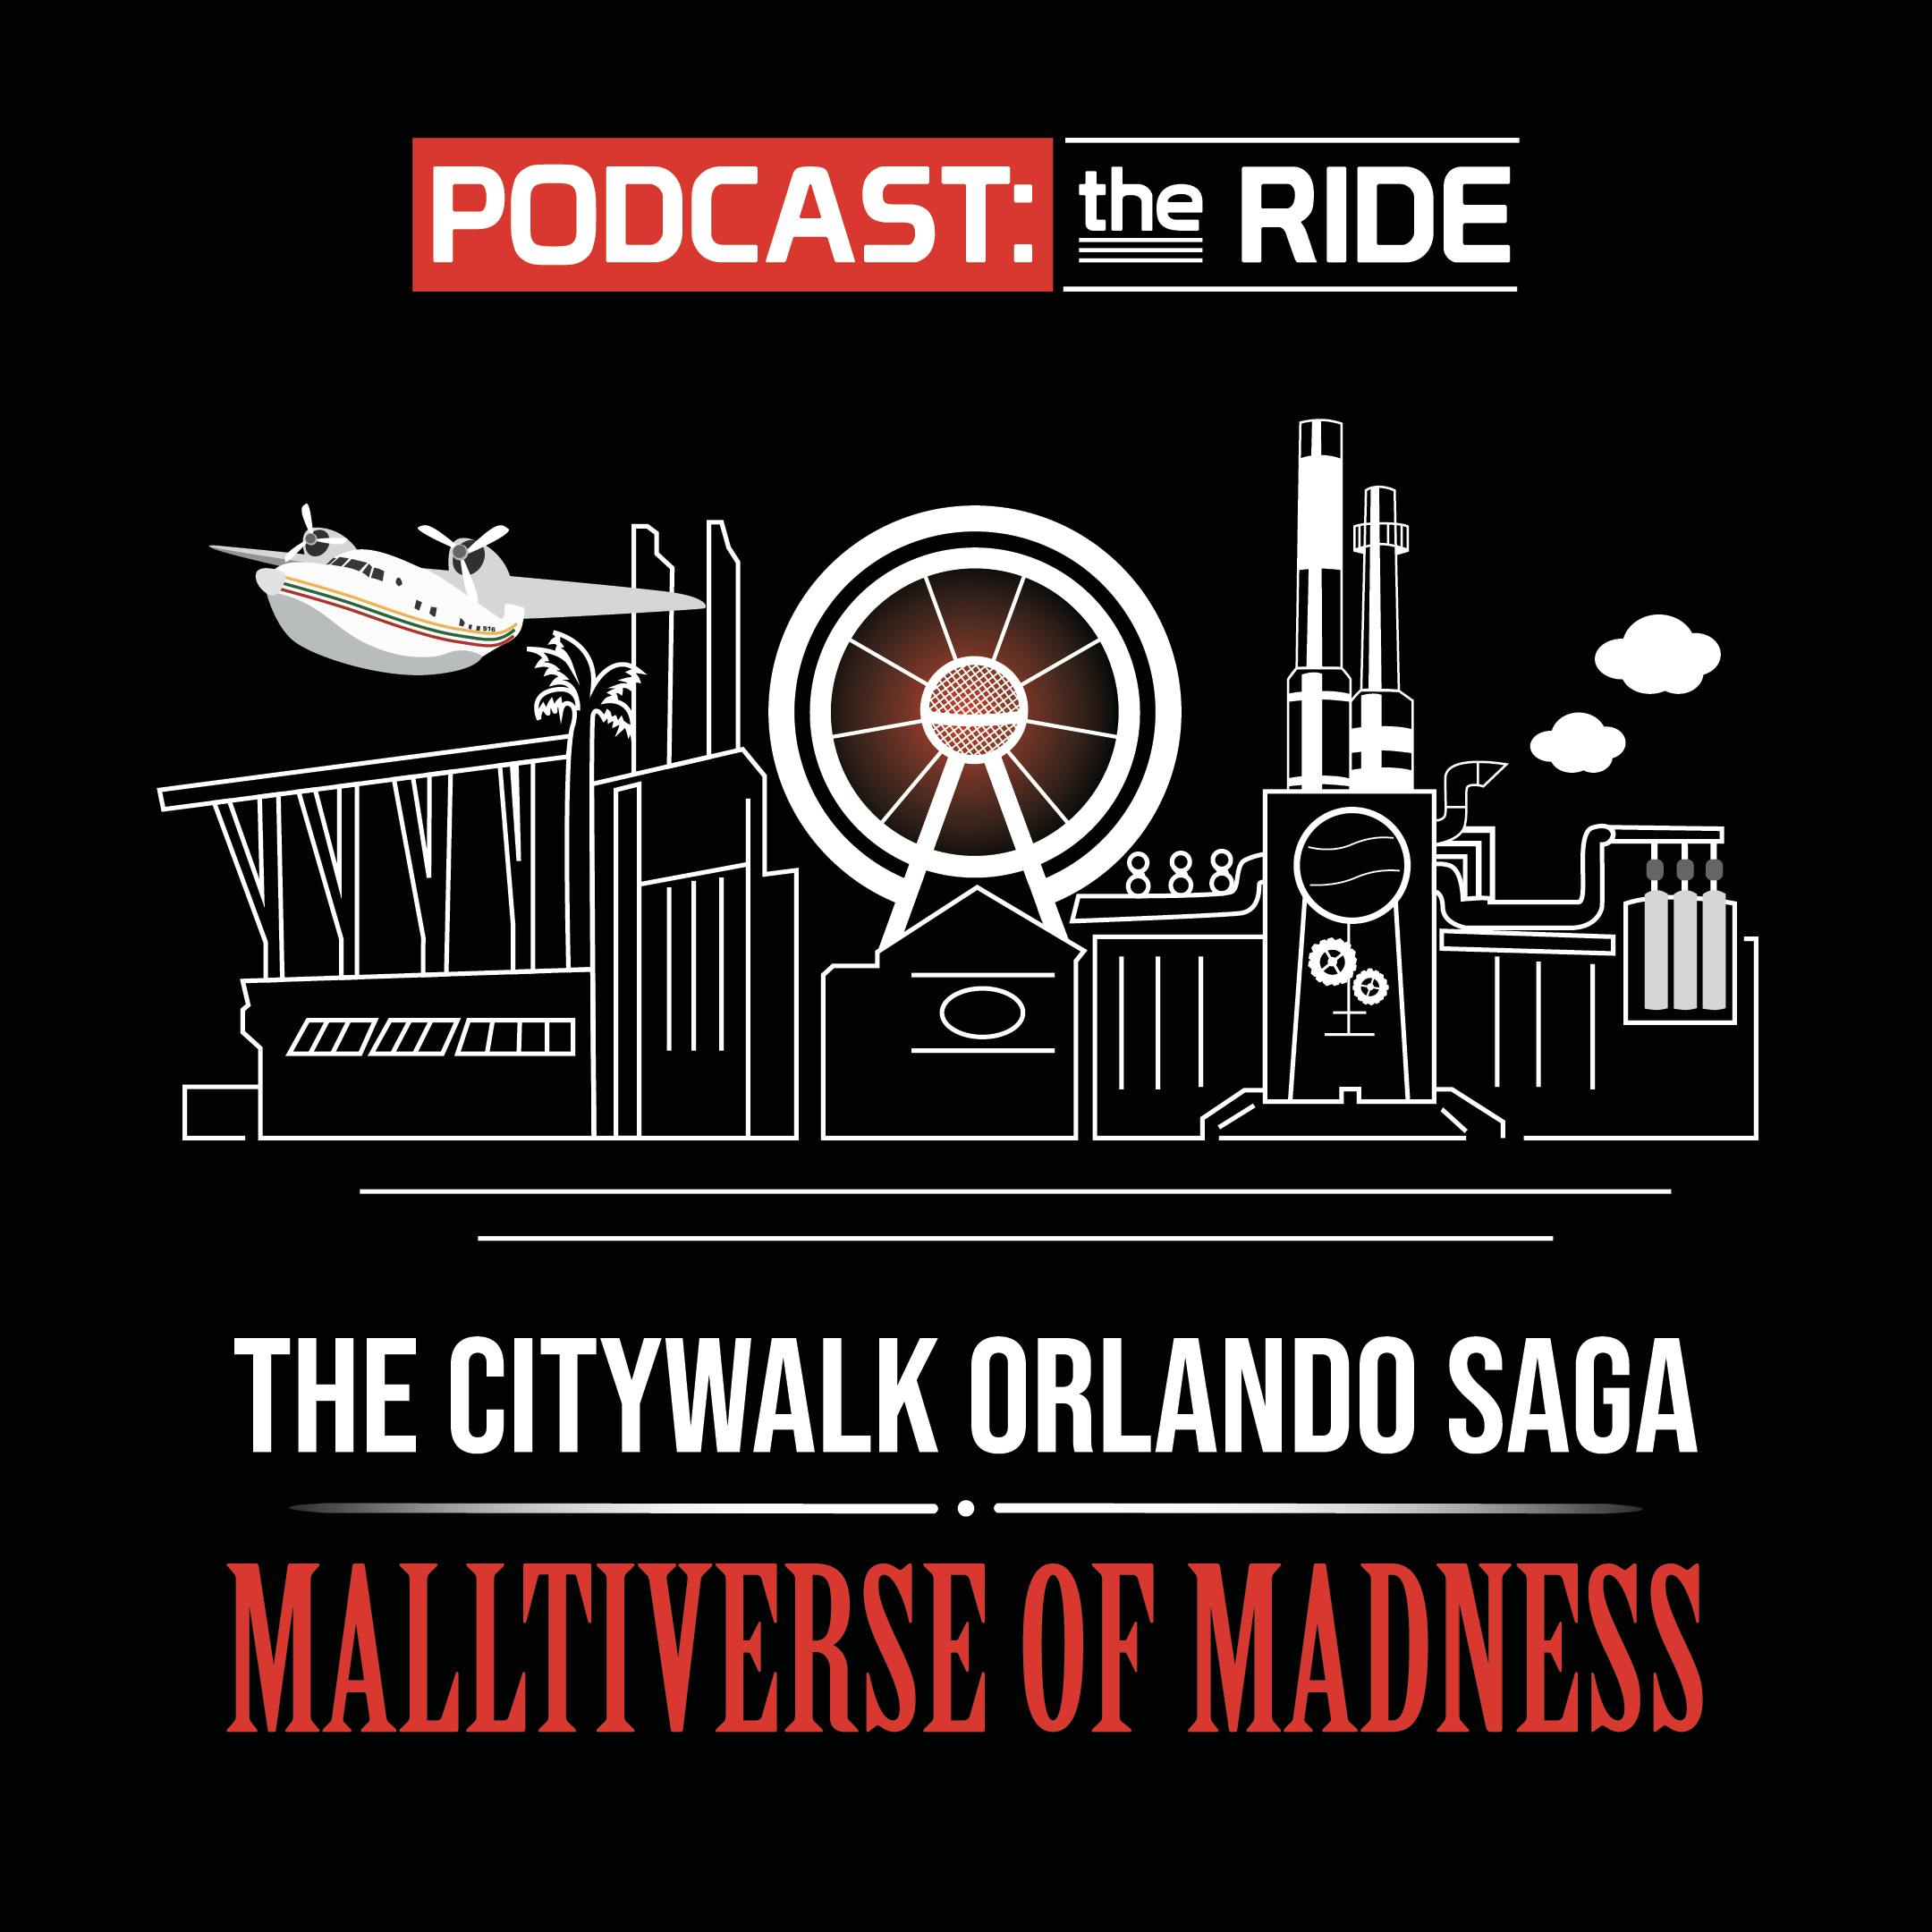 The CityWalk Orlando Saga: Malltiverse of Madness 7 - 1 with Jamie Loftus